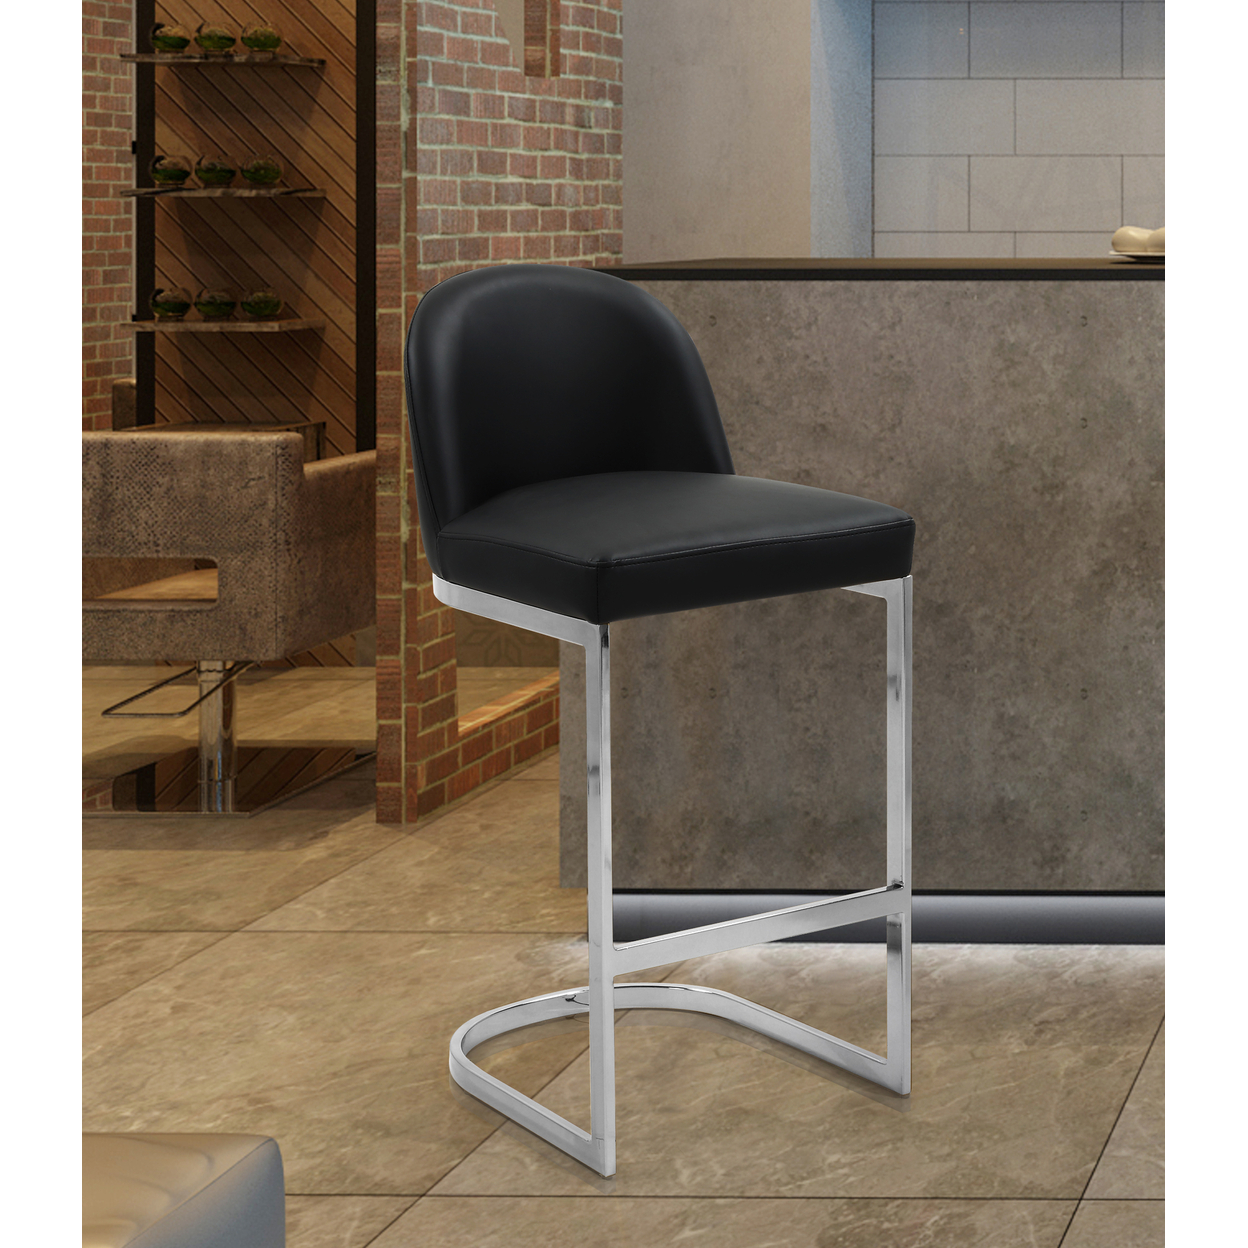 Iconic Home Liana Bar Stool Chair PU Leather Upholstered Armless Design Half-Moon Chrome Plated Solid Metal U-Shaped Base - Black